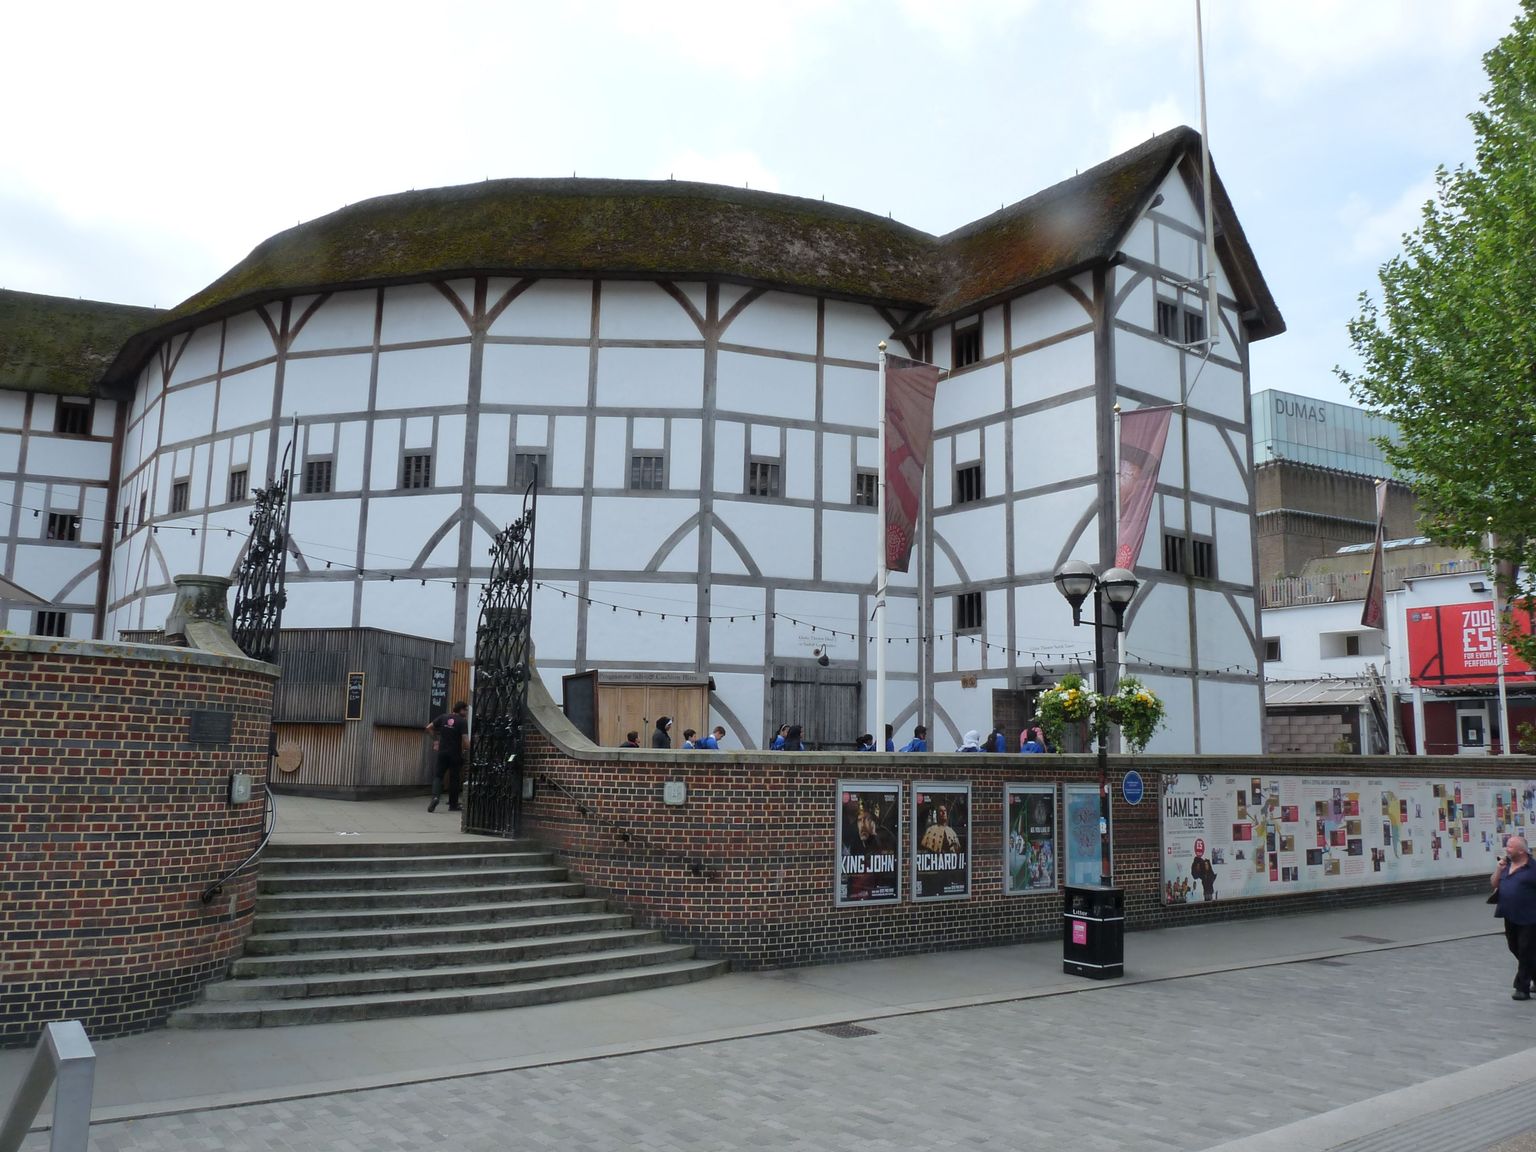 Shakespeare Globe